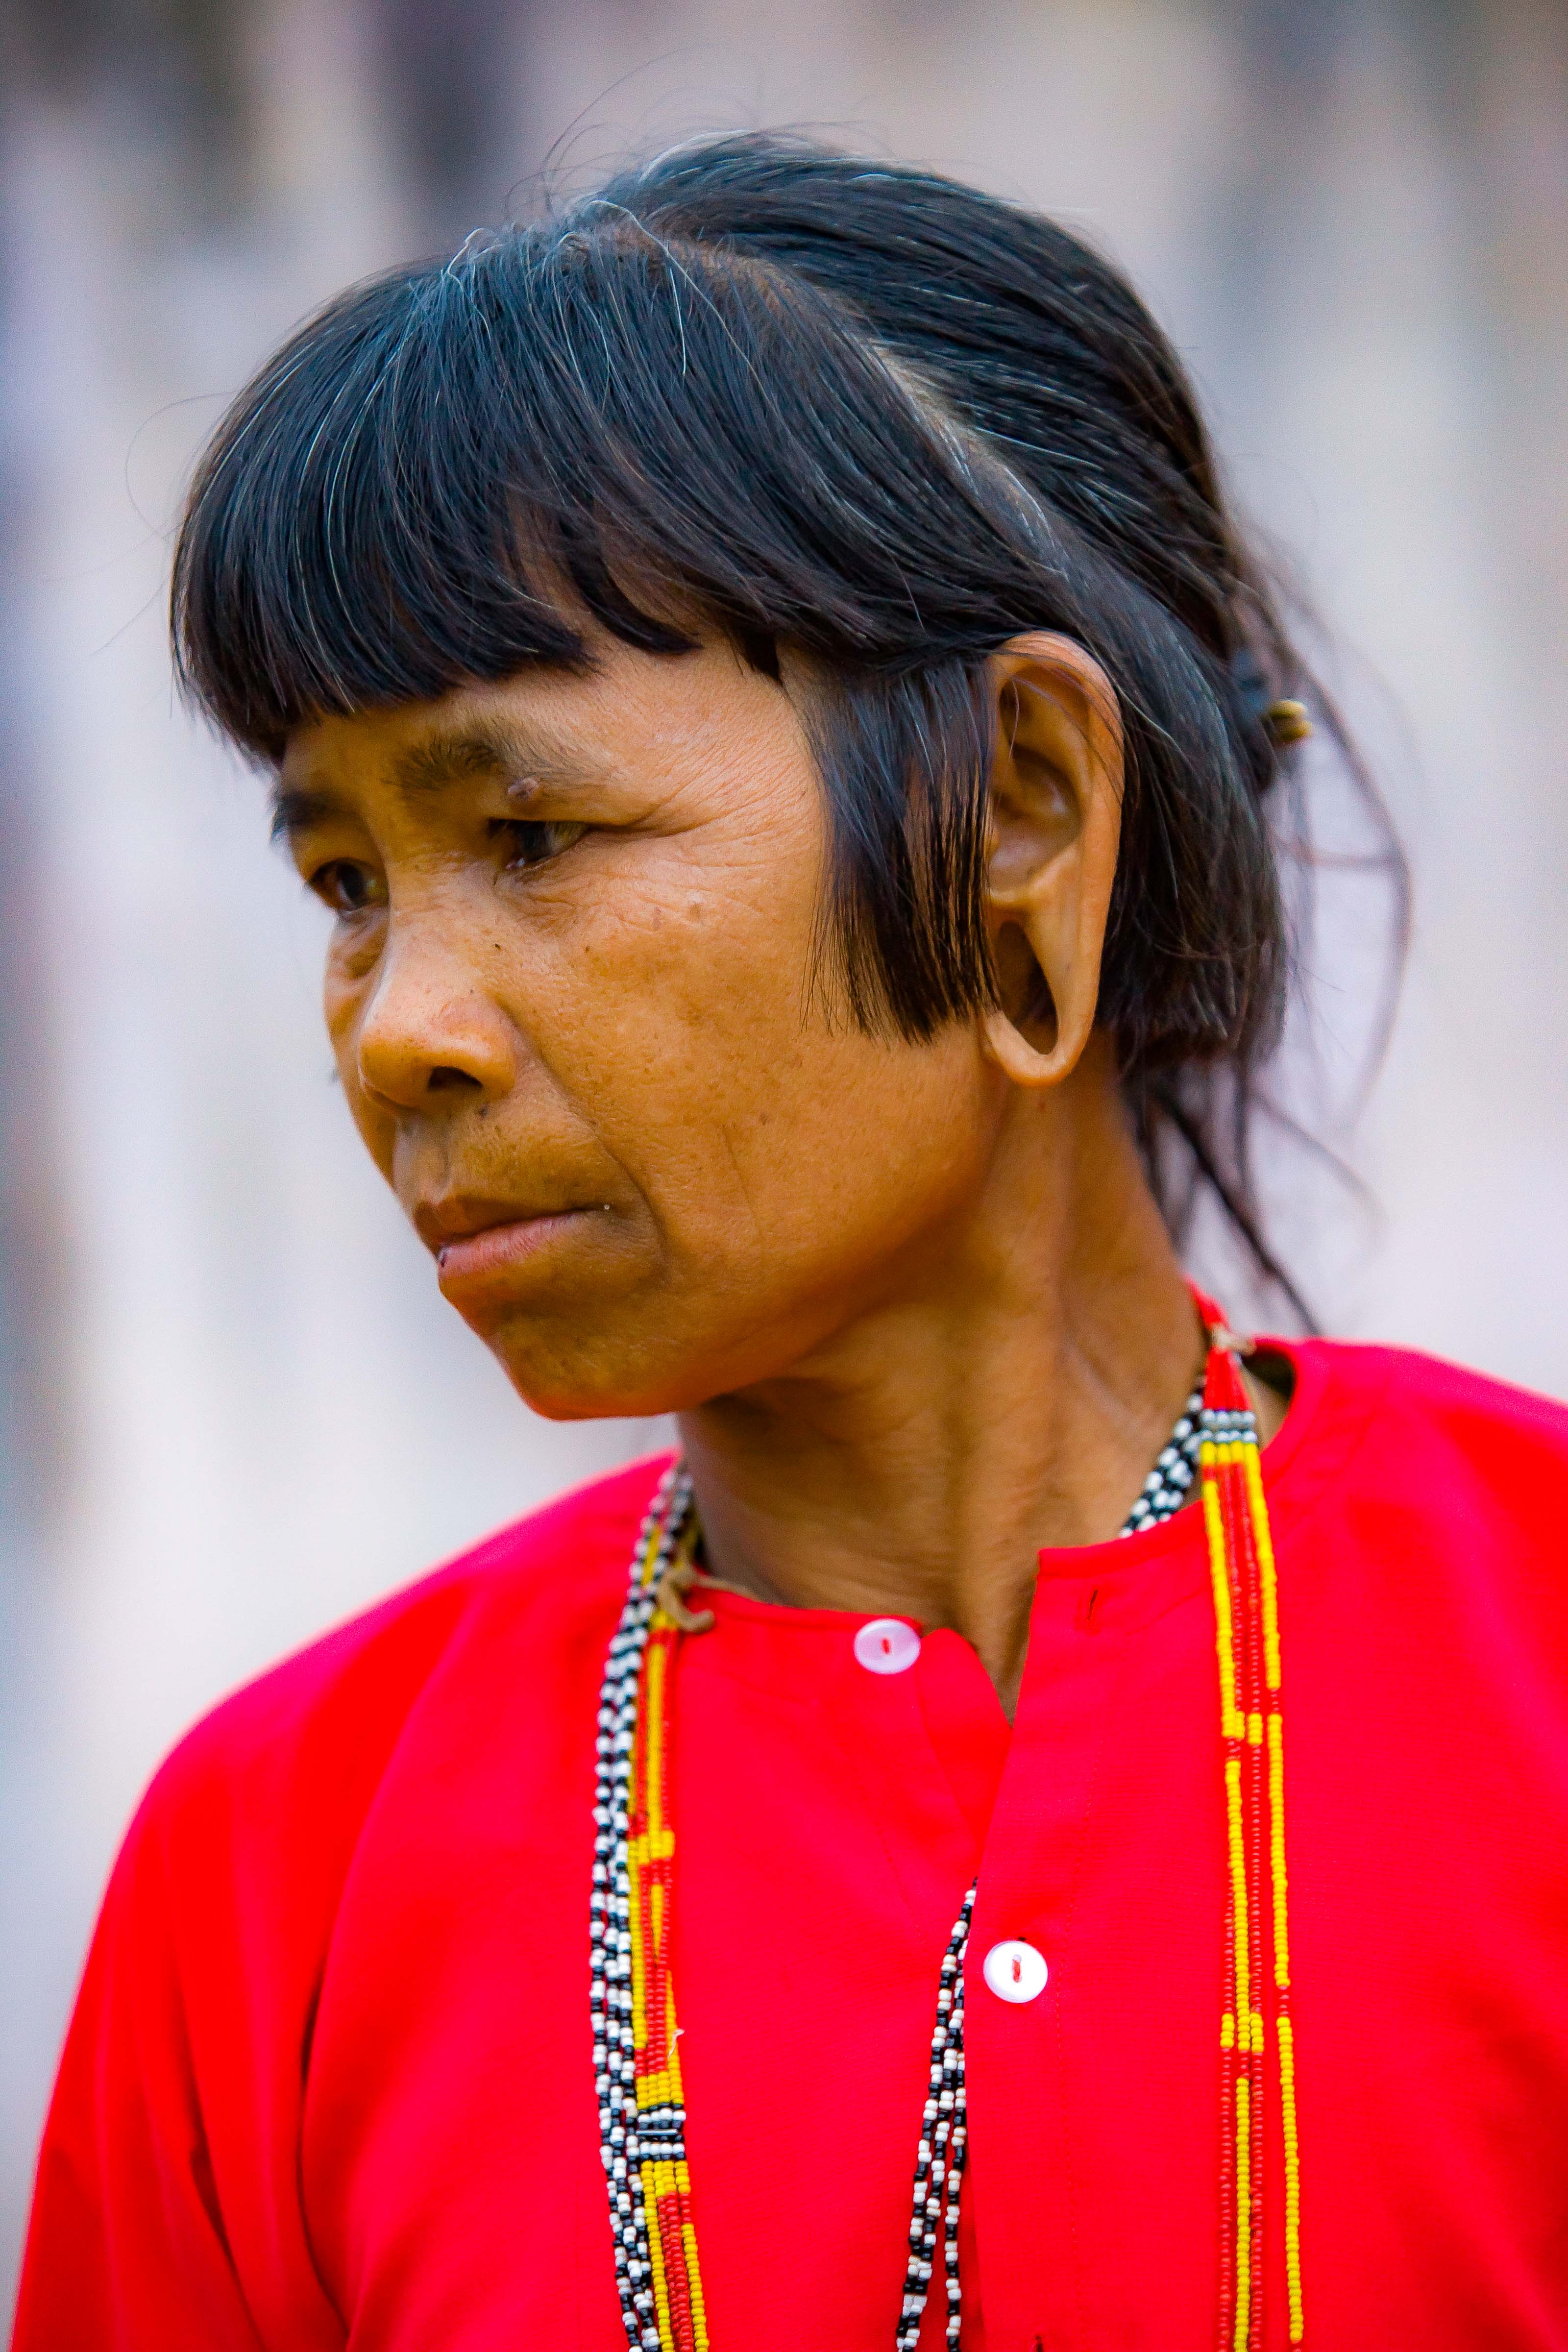 Vietnam, BinhPhuoc Prov, Tribal Woman, 2010, img_0255